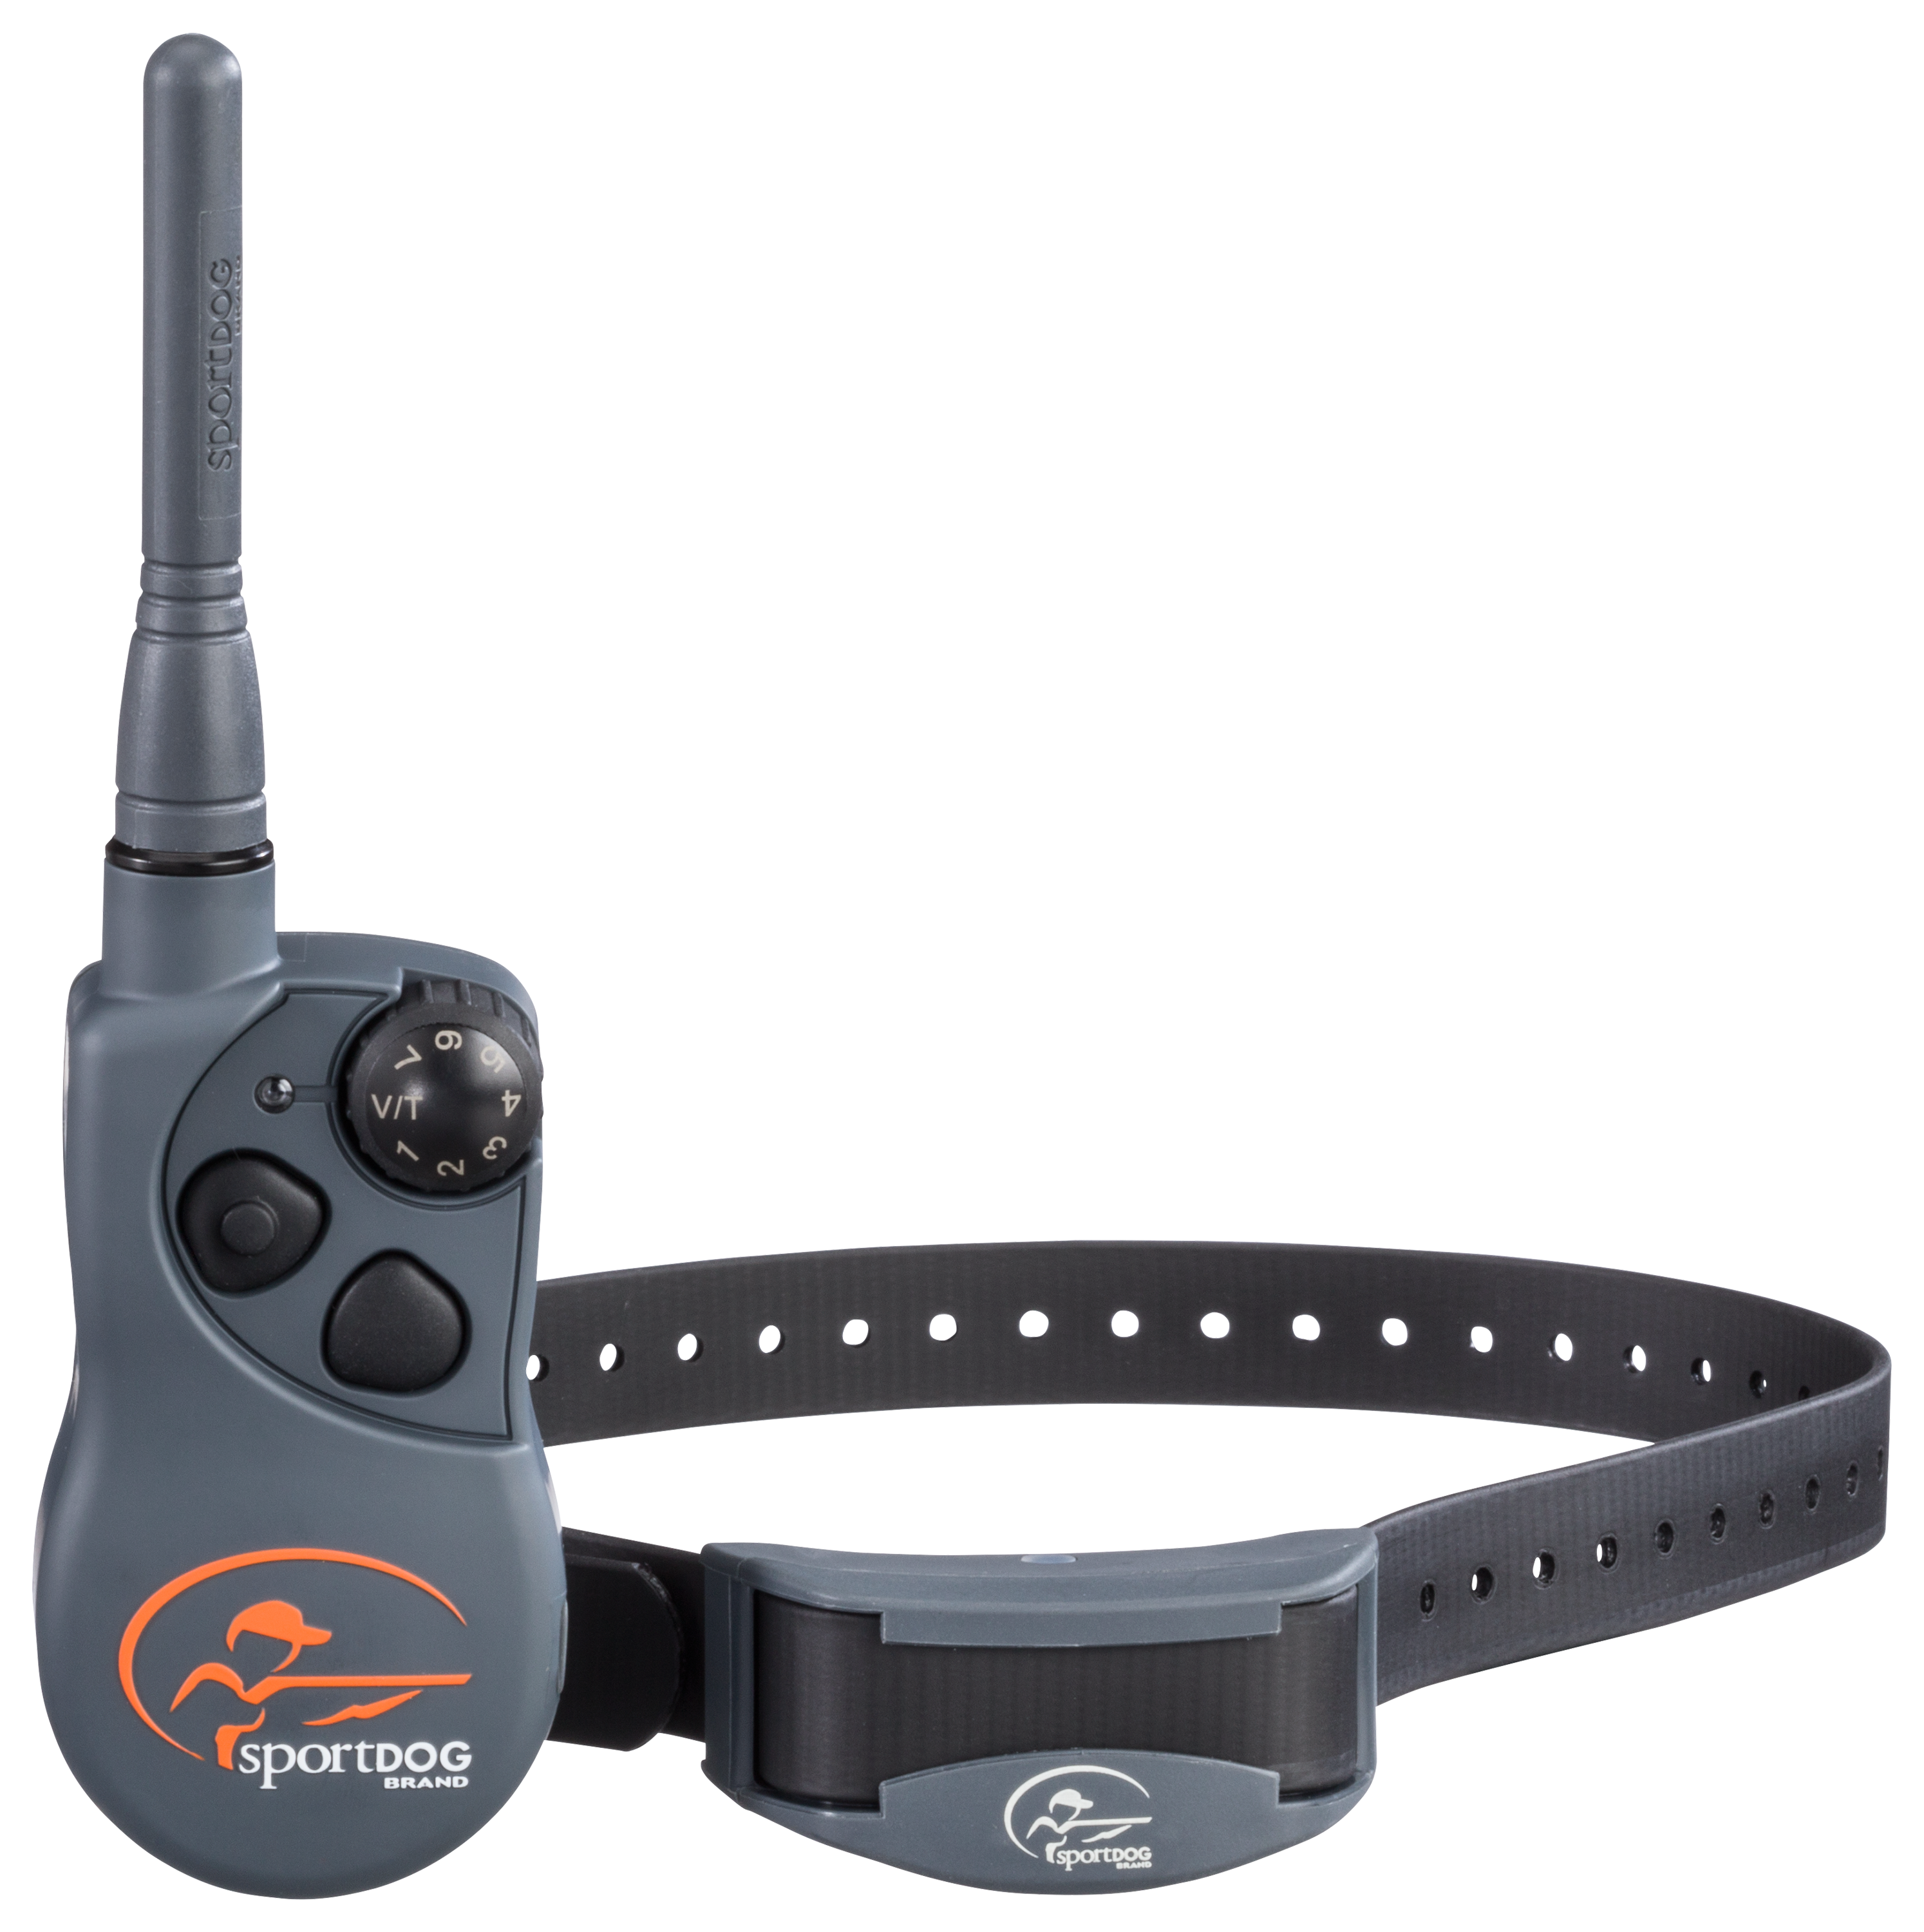 SportDOG Brand SportHunter 825X Electronic Dog Training Collar